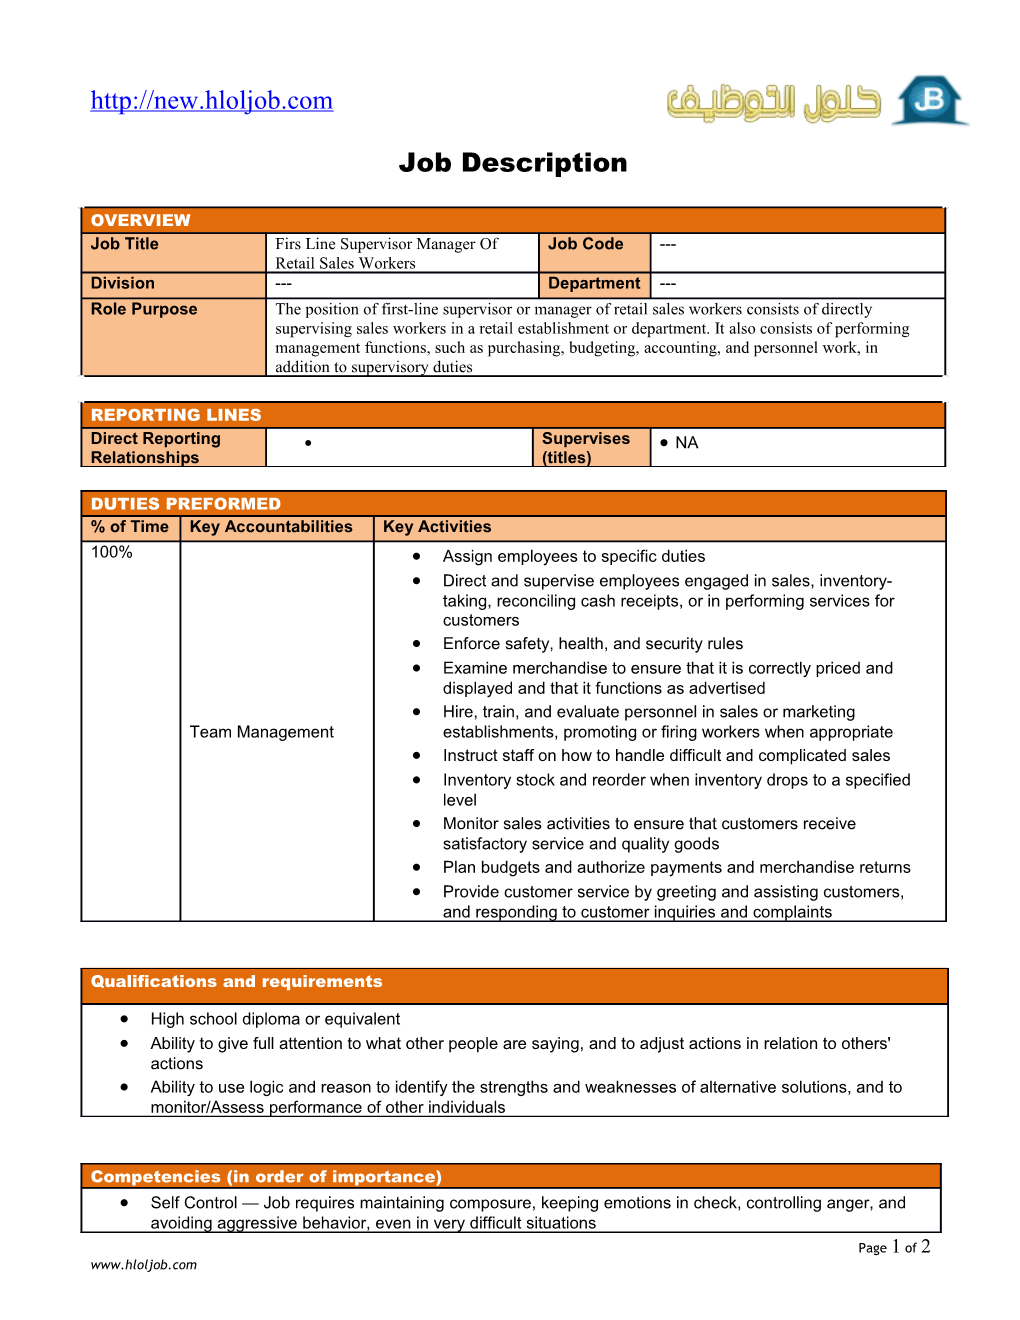 Job Description Template s6